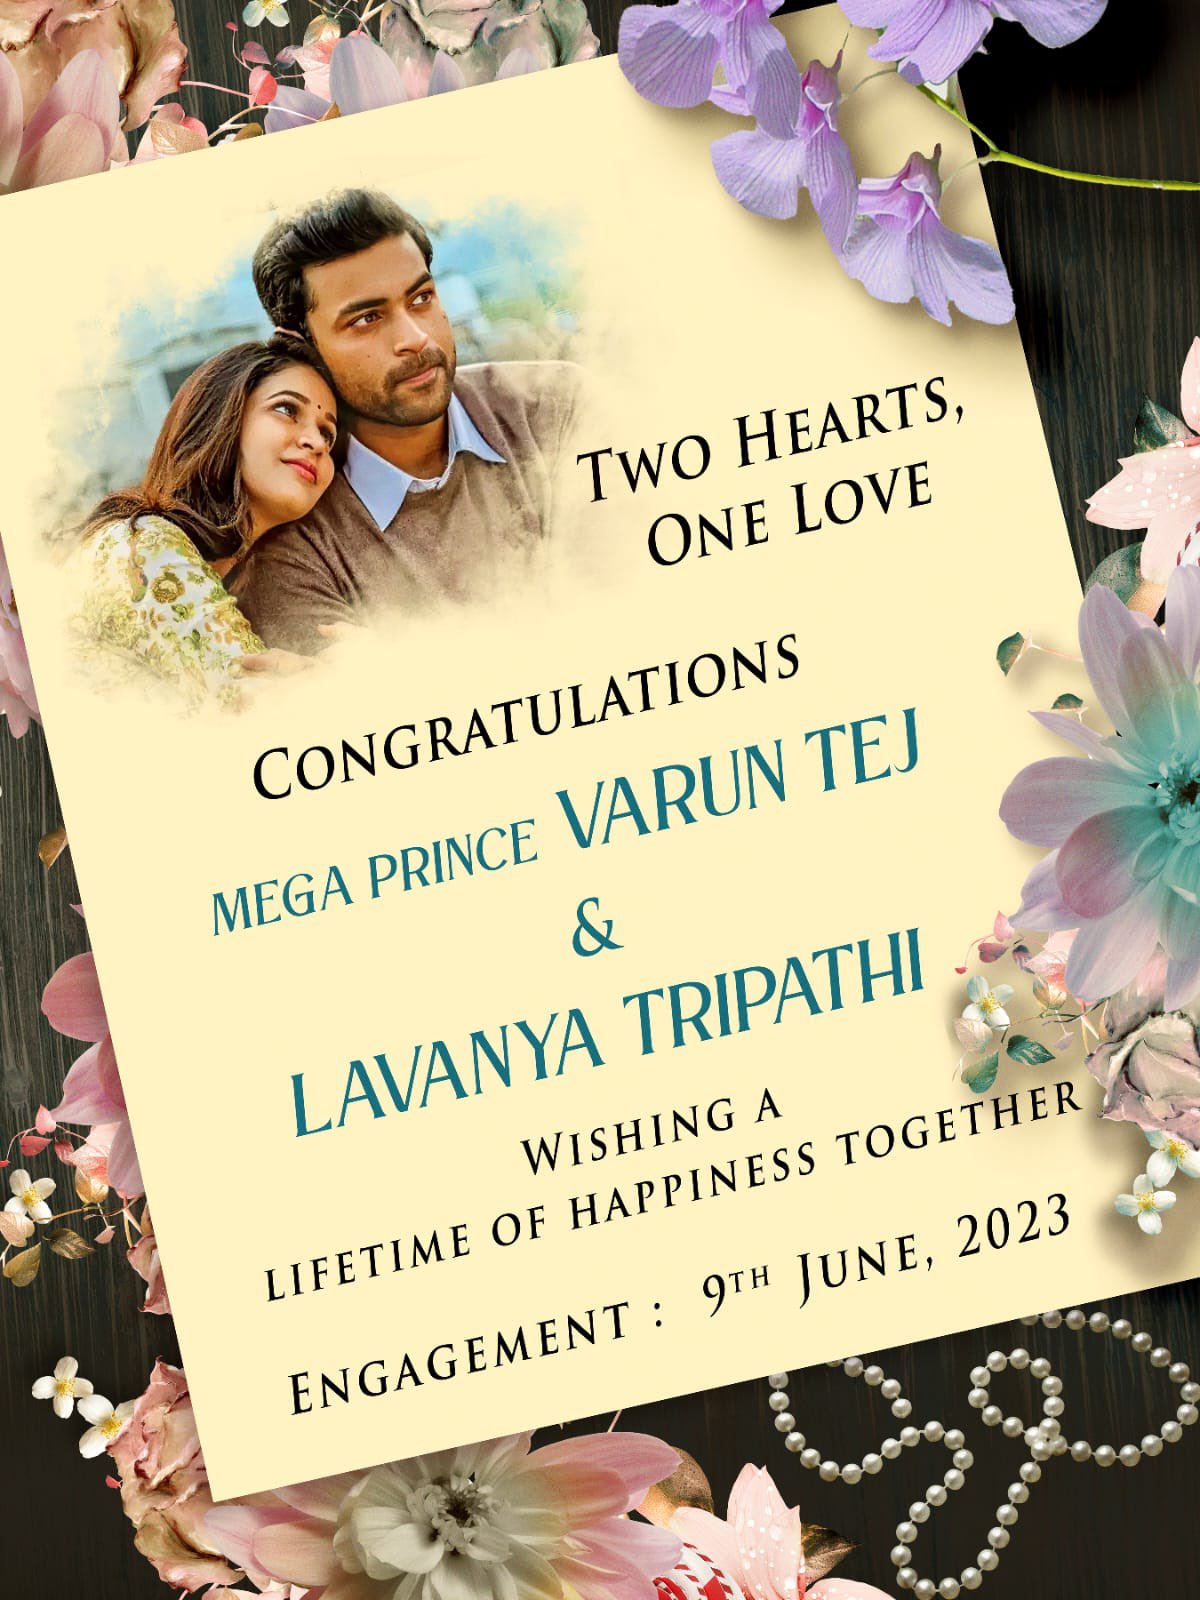 Varun Tej and Lavanya's wedding date will be announced very soon